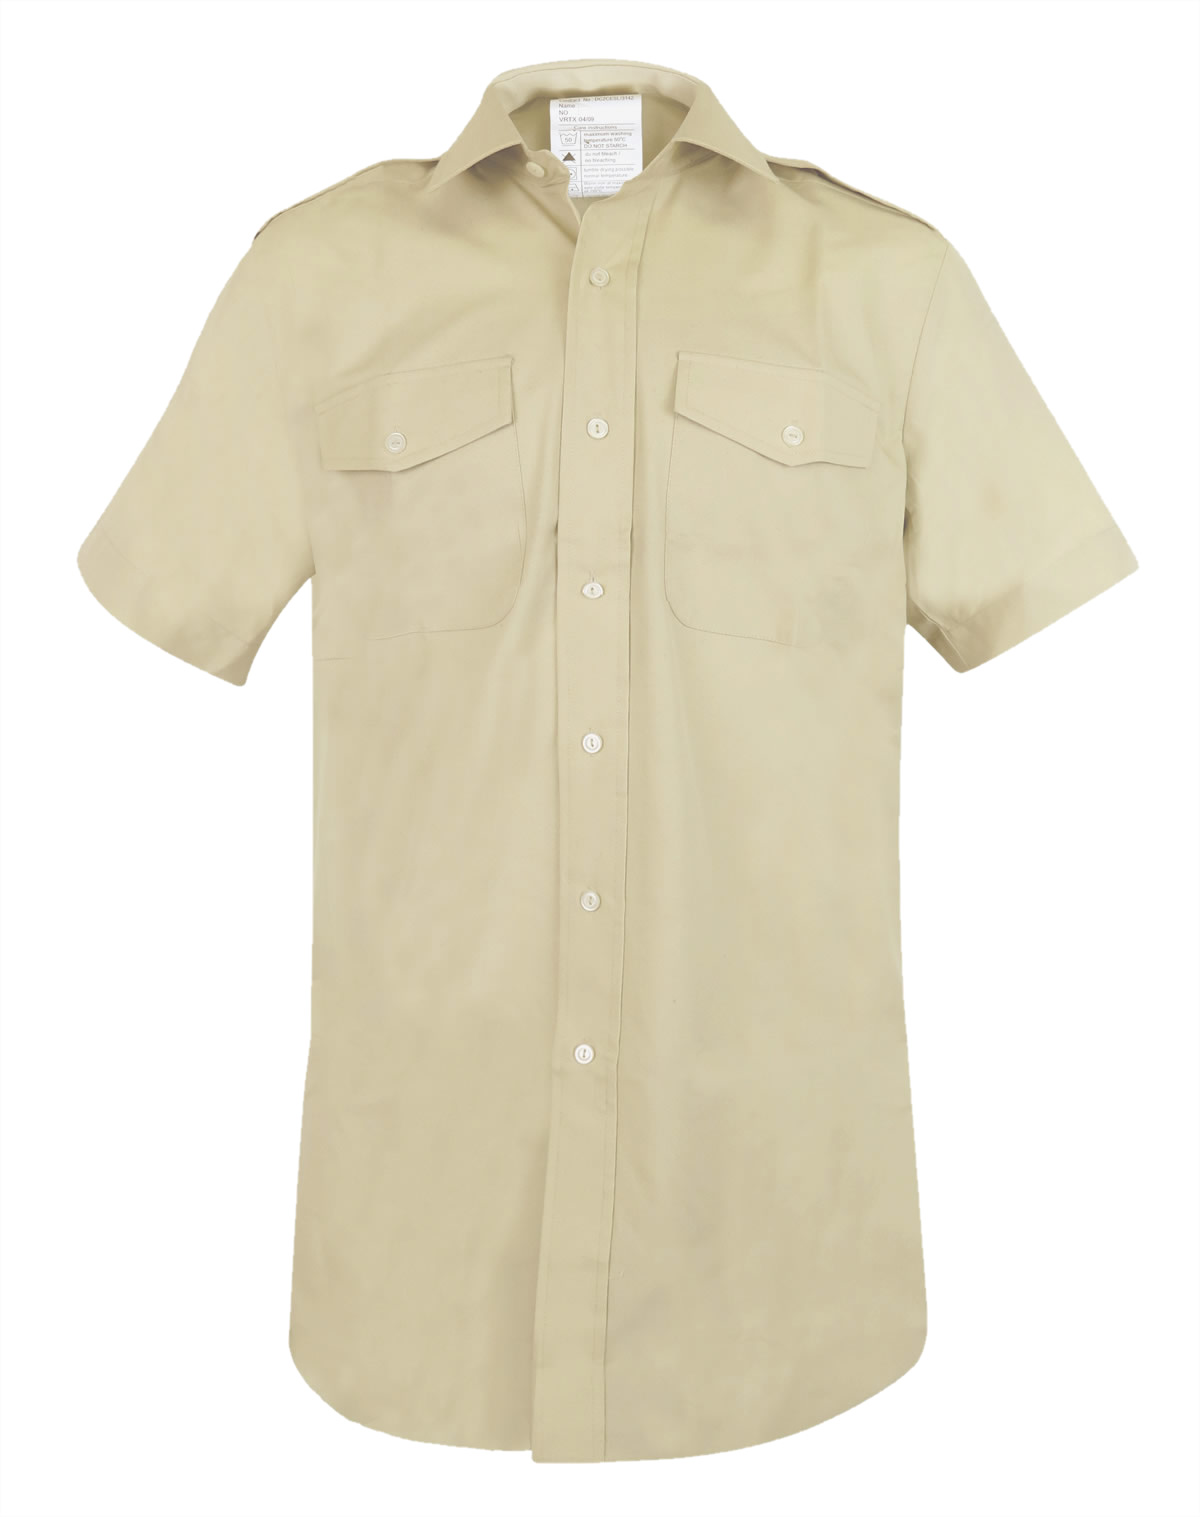 New Mens Short Sleeve Fawn Army Shirt (No.2 FAD) by British Army